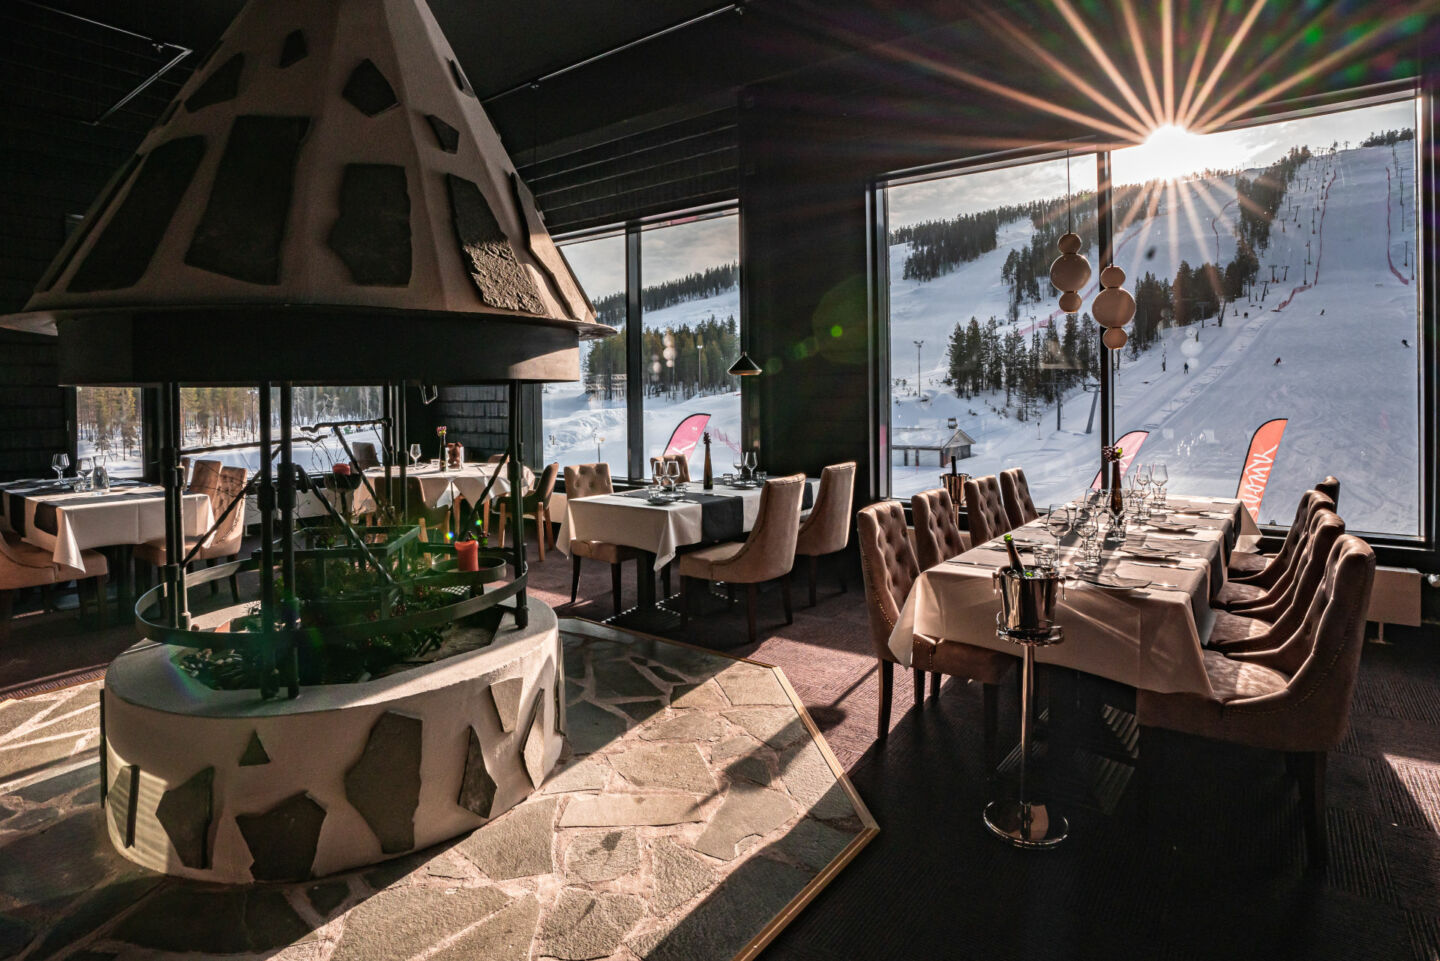 Restaurant Takka at Suomu Ski Resort in Kemijärvi, the Arctic Lakeland of Finnish Lapland